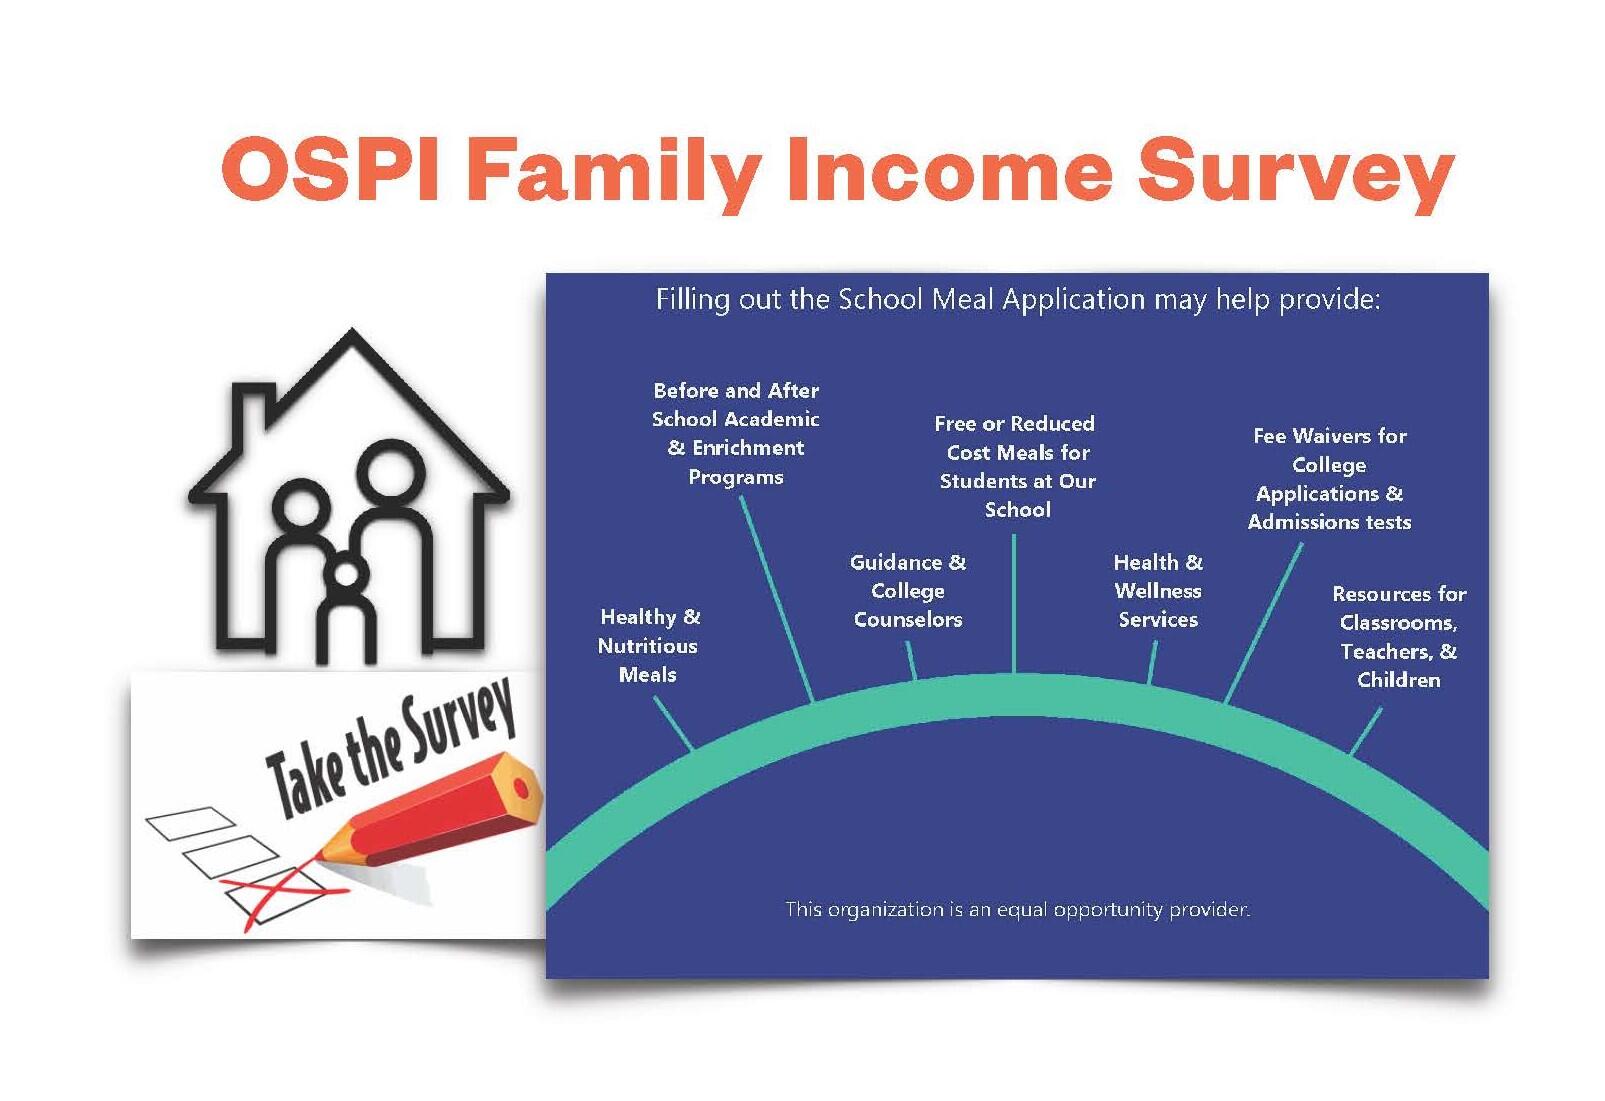 OSPI Family income survey graph